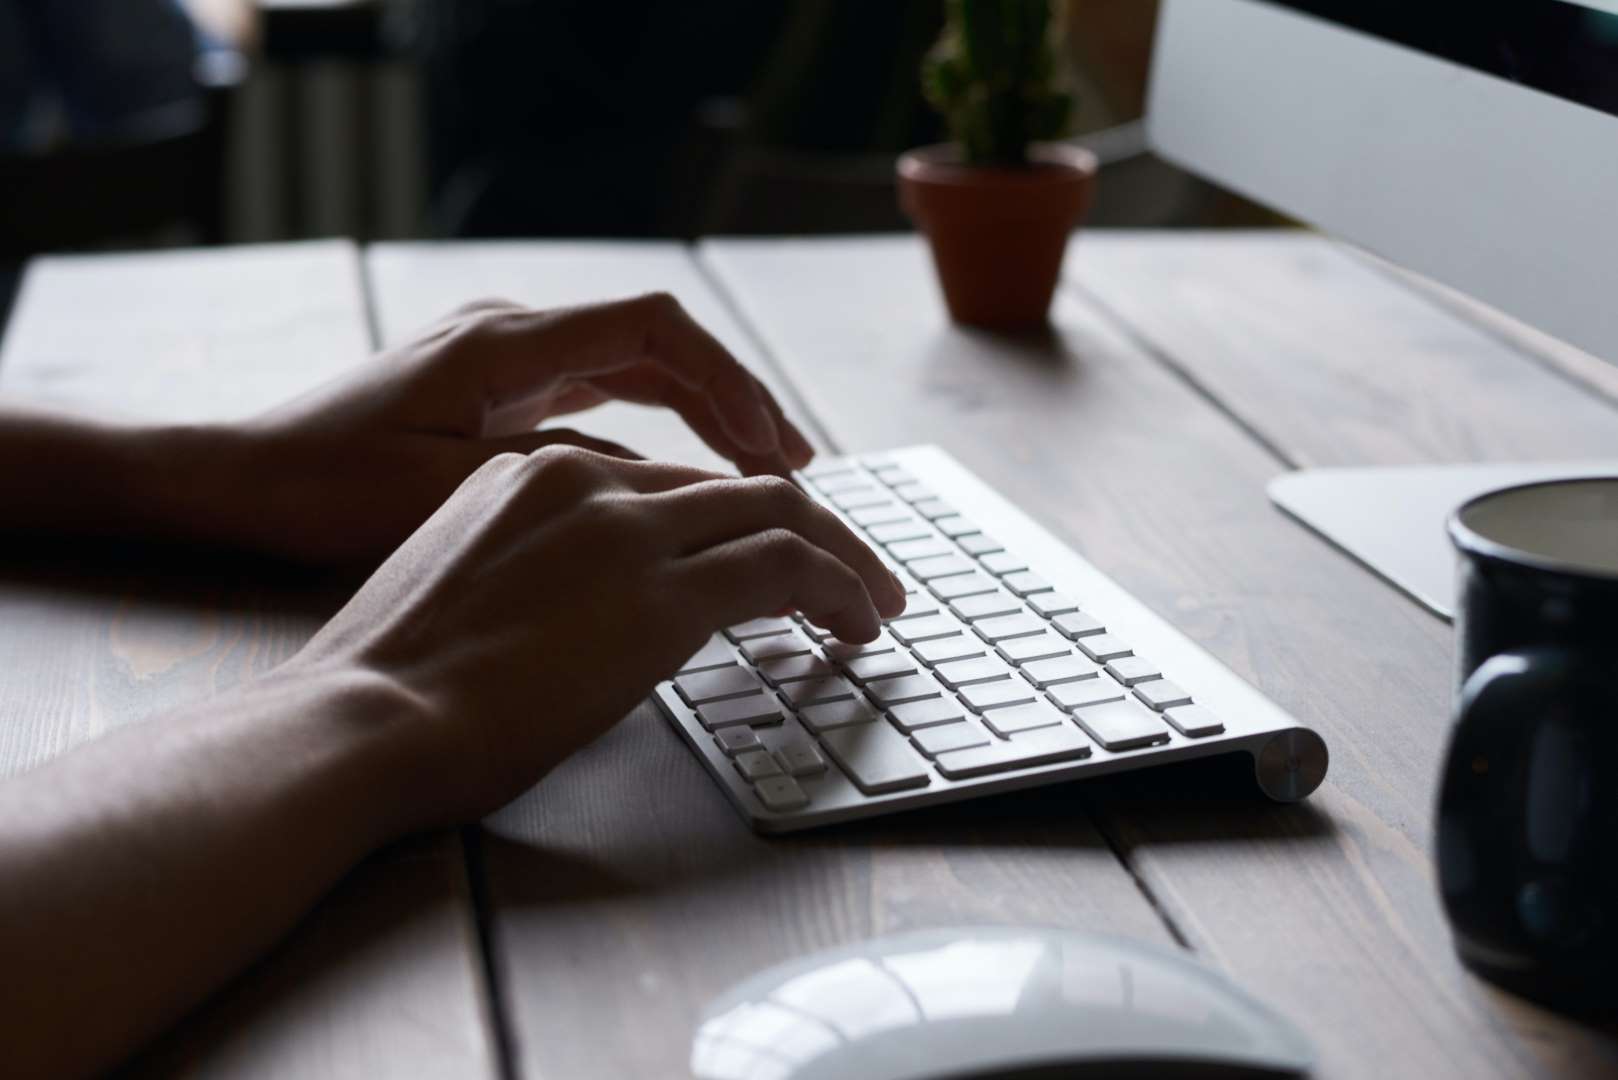 Lifestyle shot, showing a close up of someone using an ergonomic keyboard